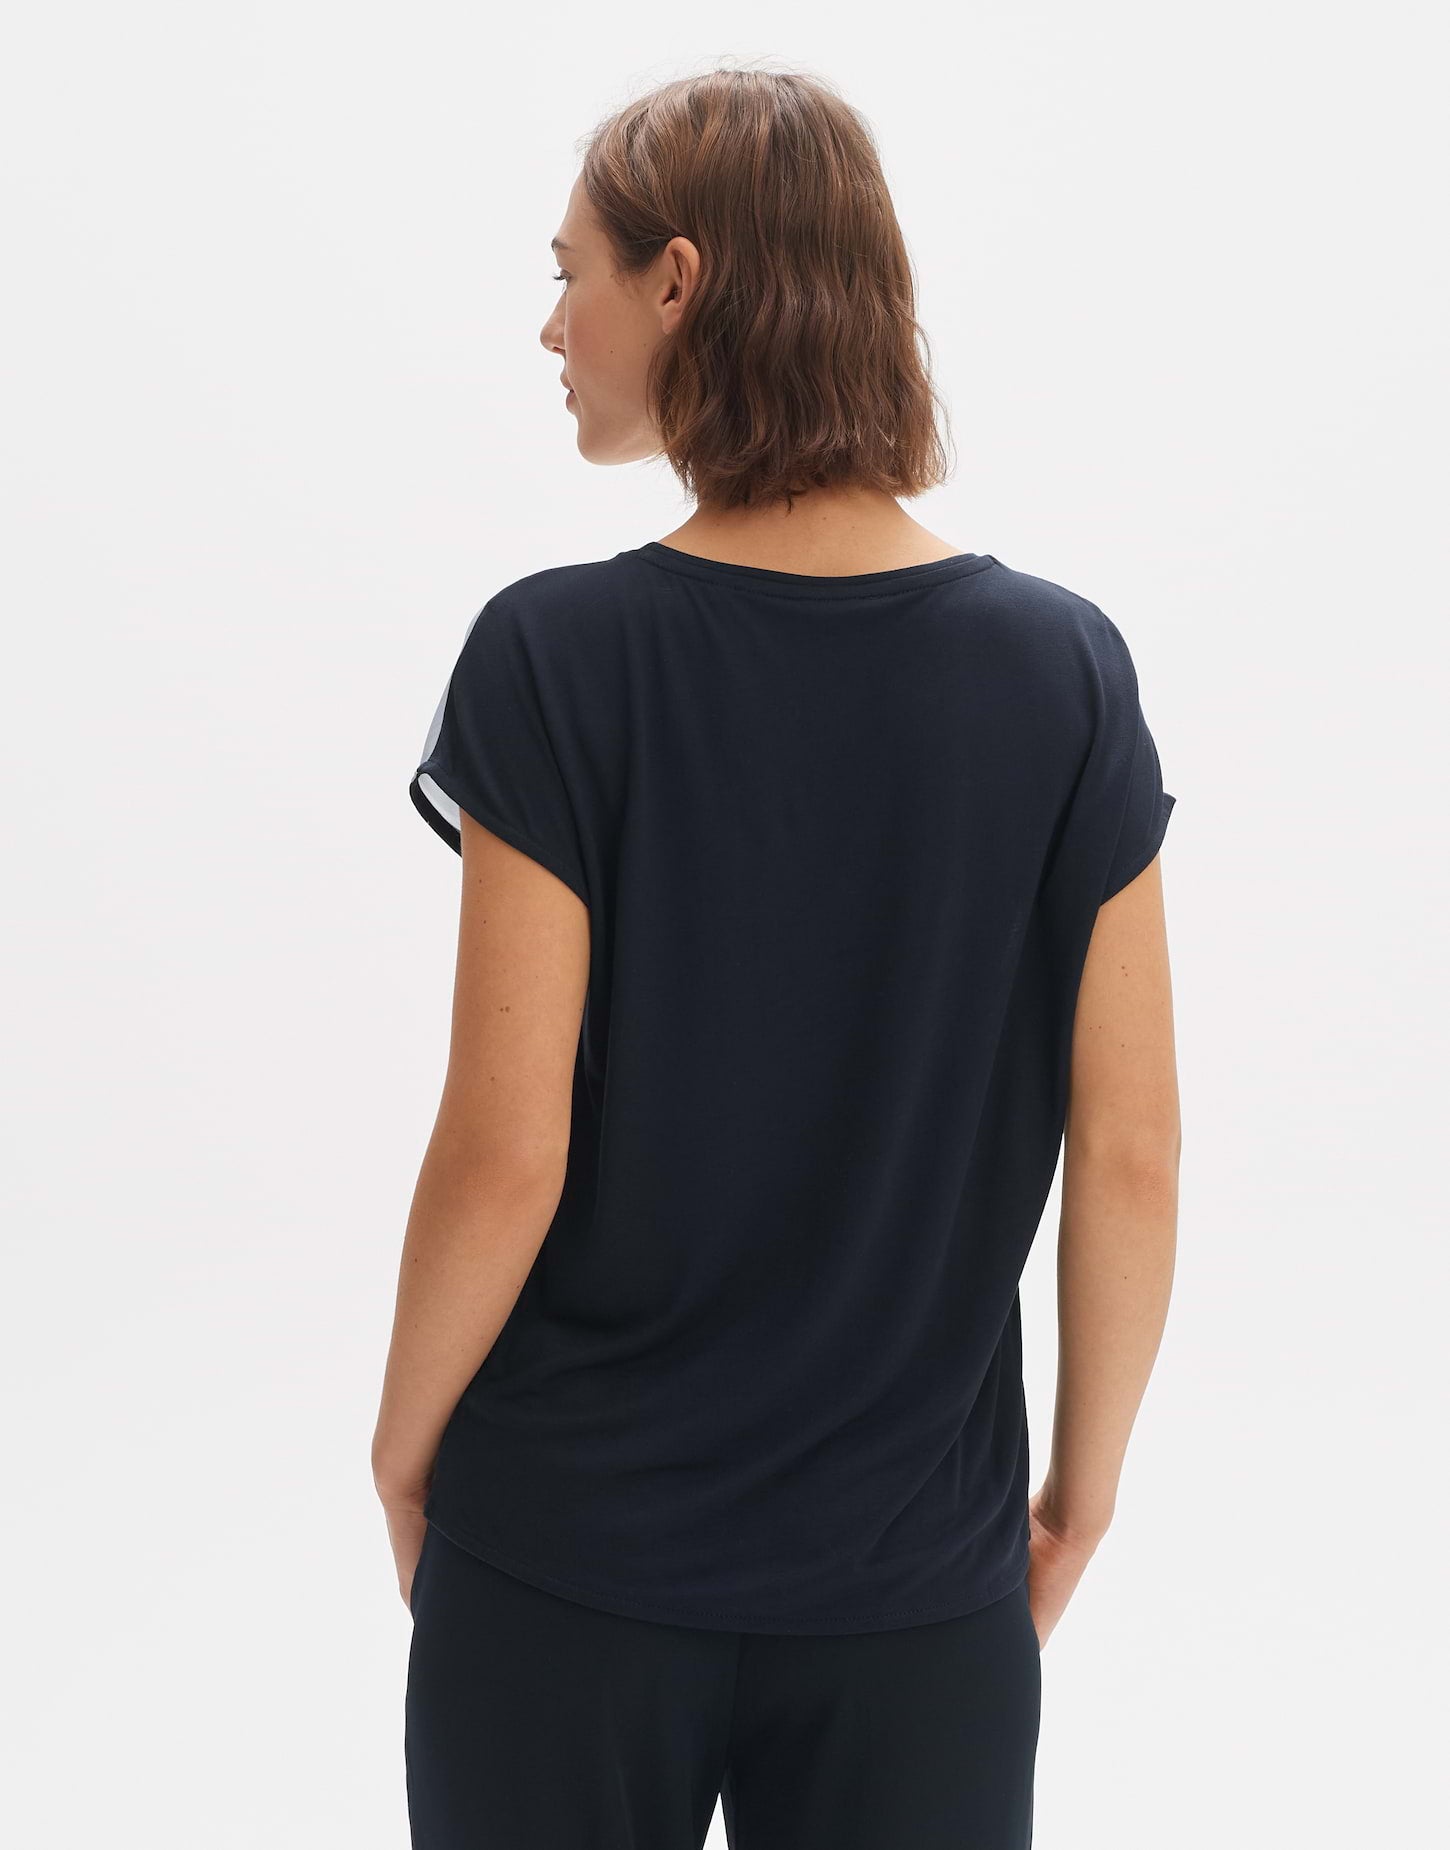 Opus - Sommerliches Shirt mit modernem Print - Stini